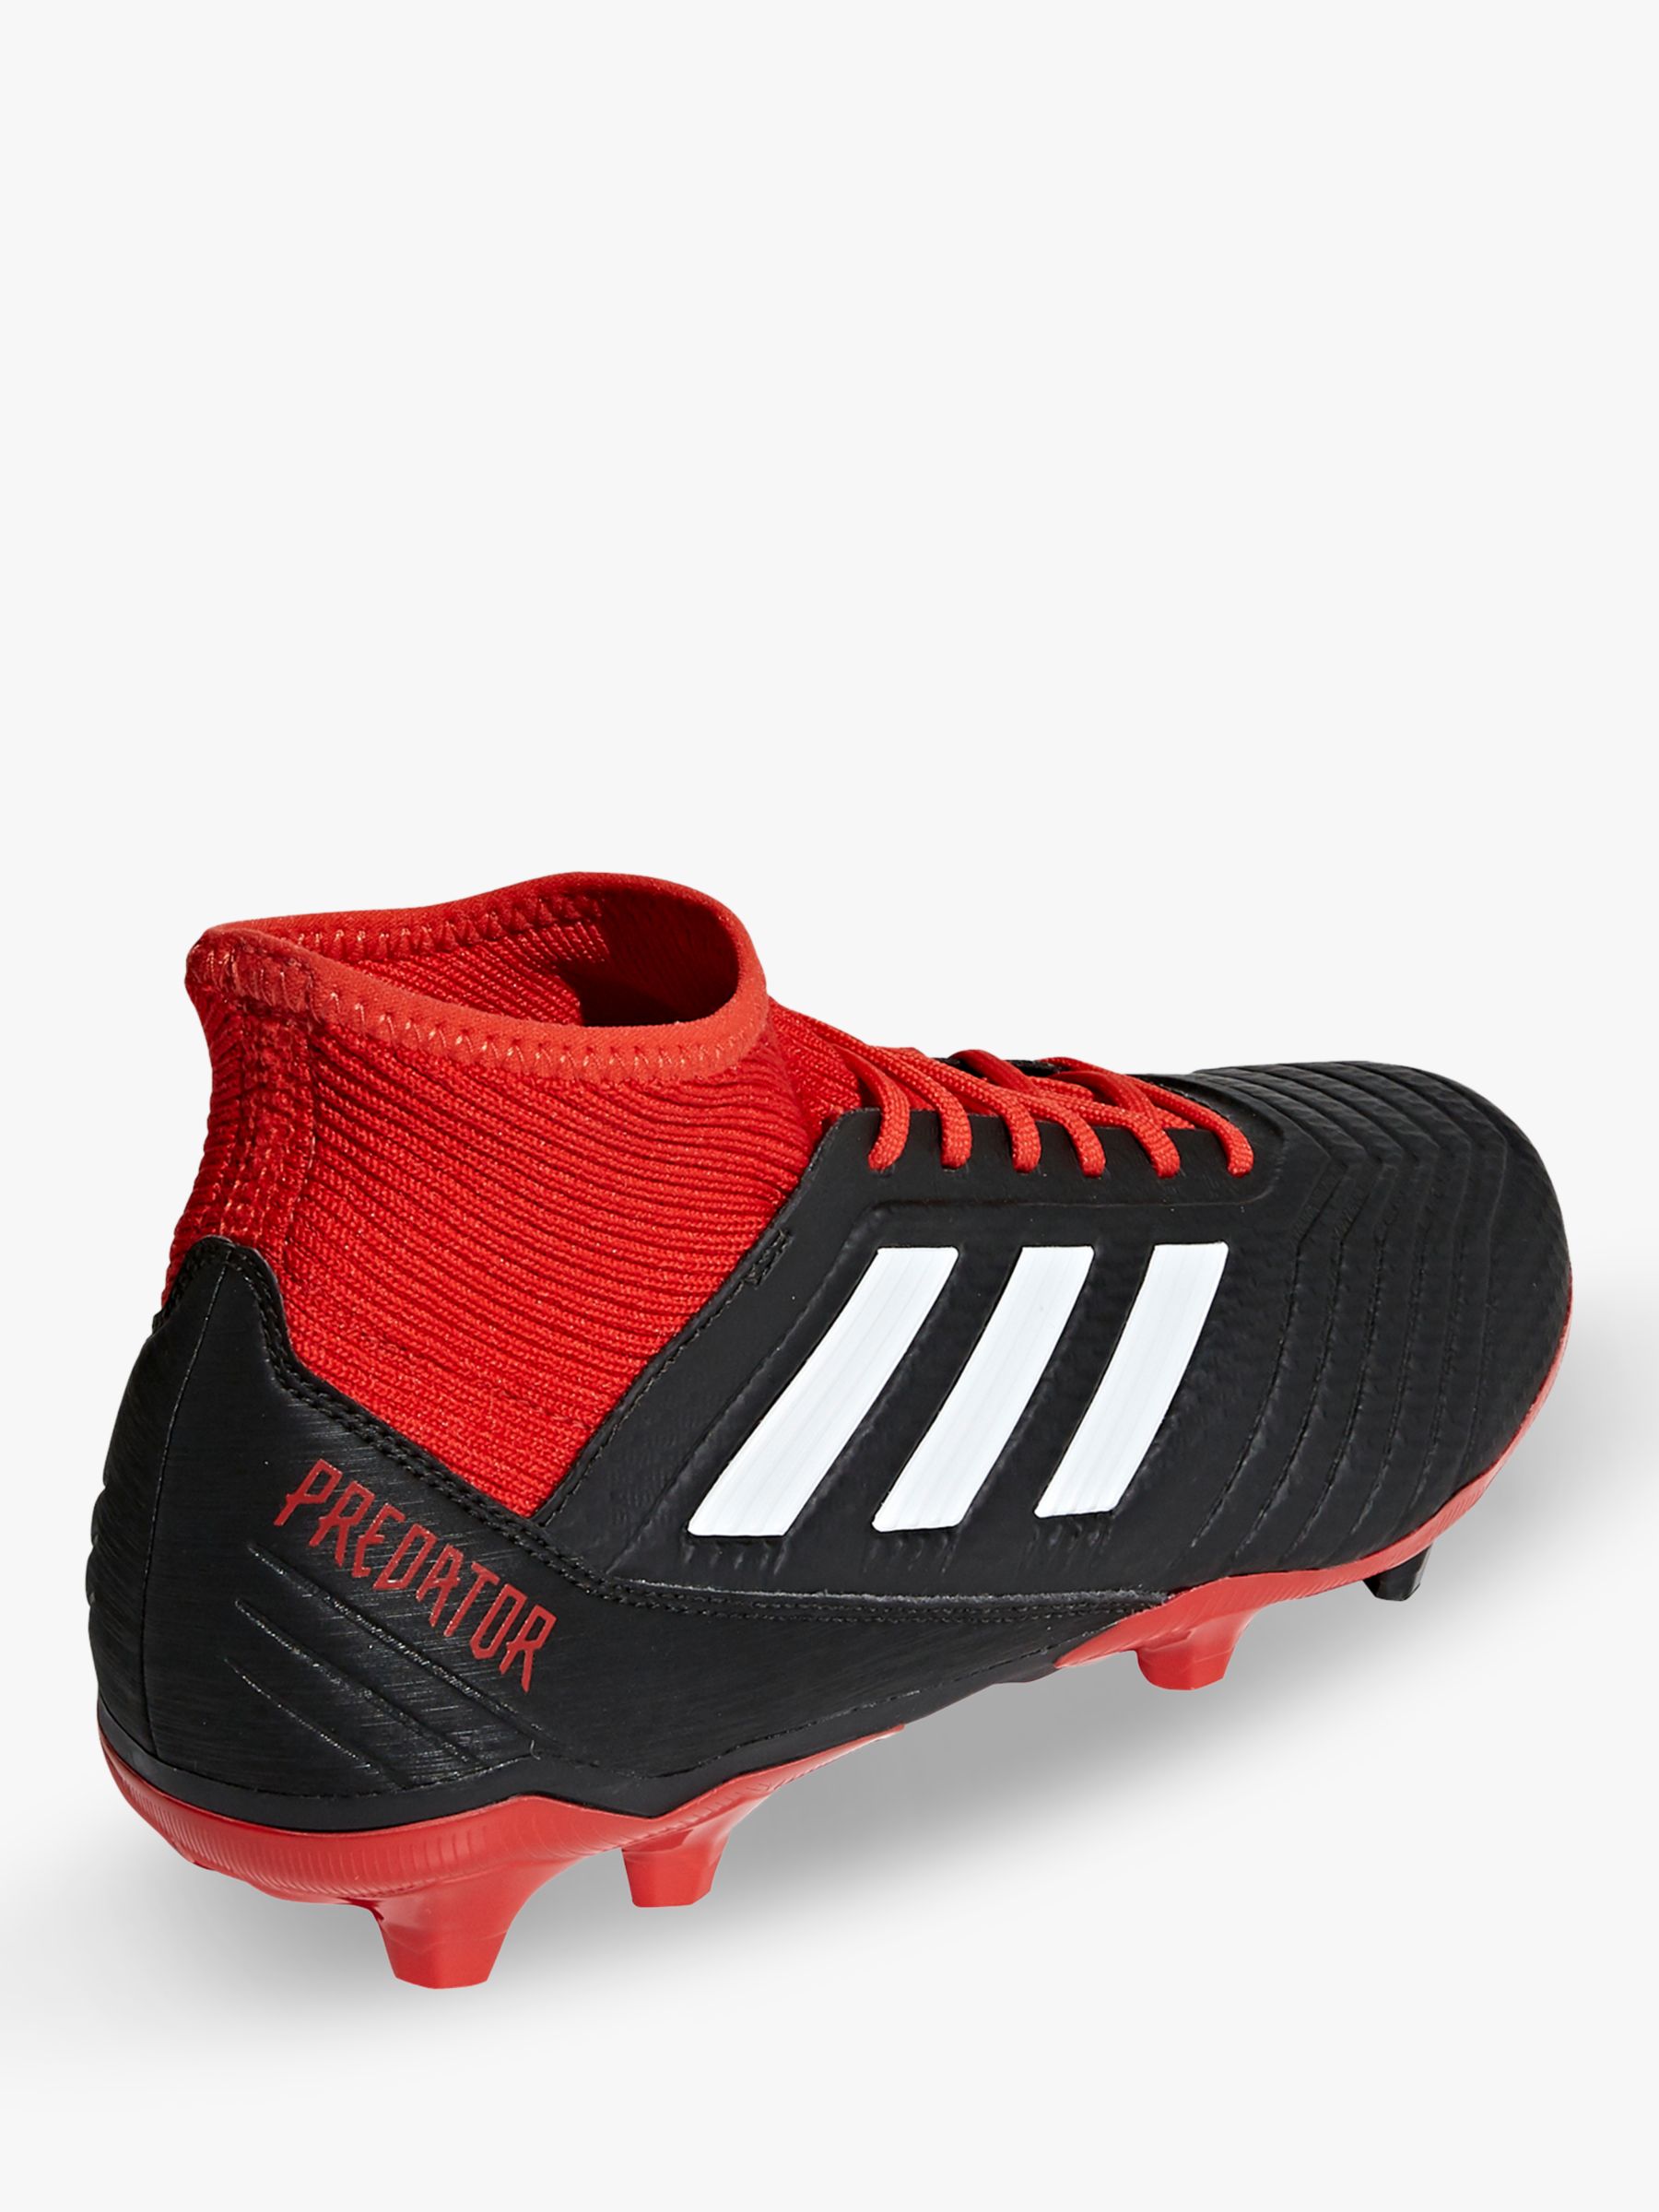 adidas predator football boots black red